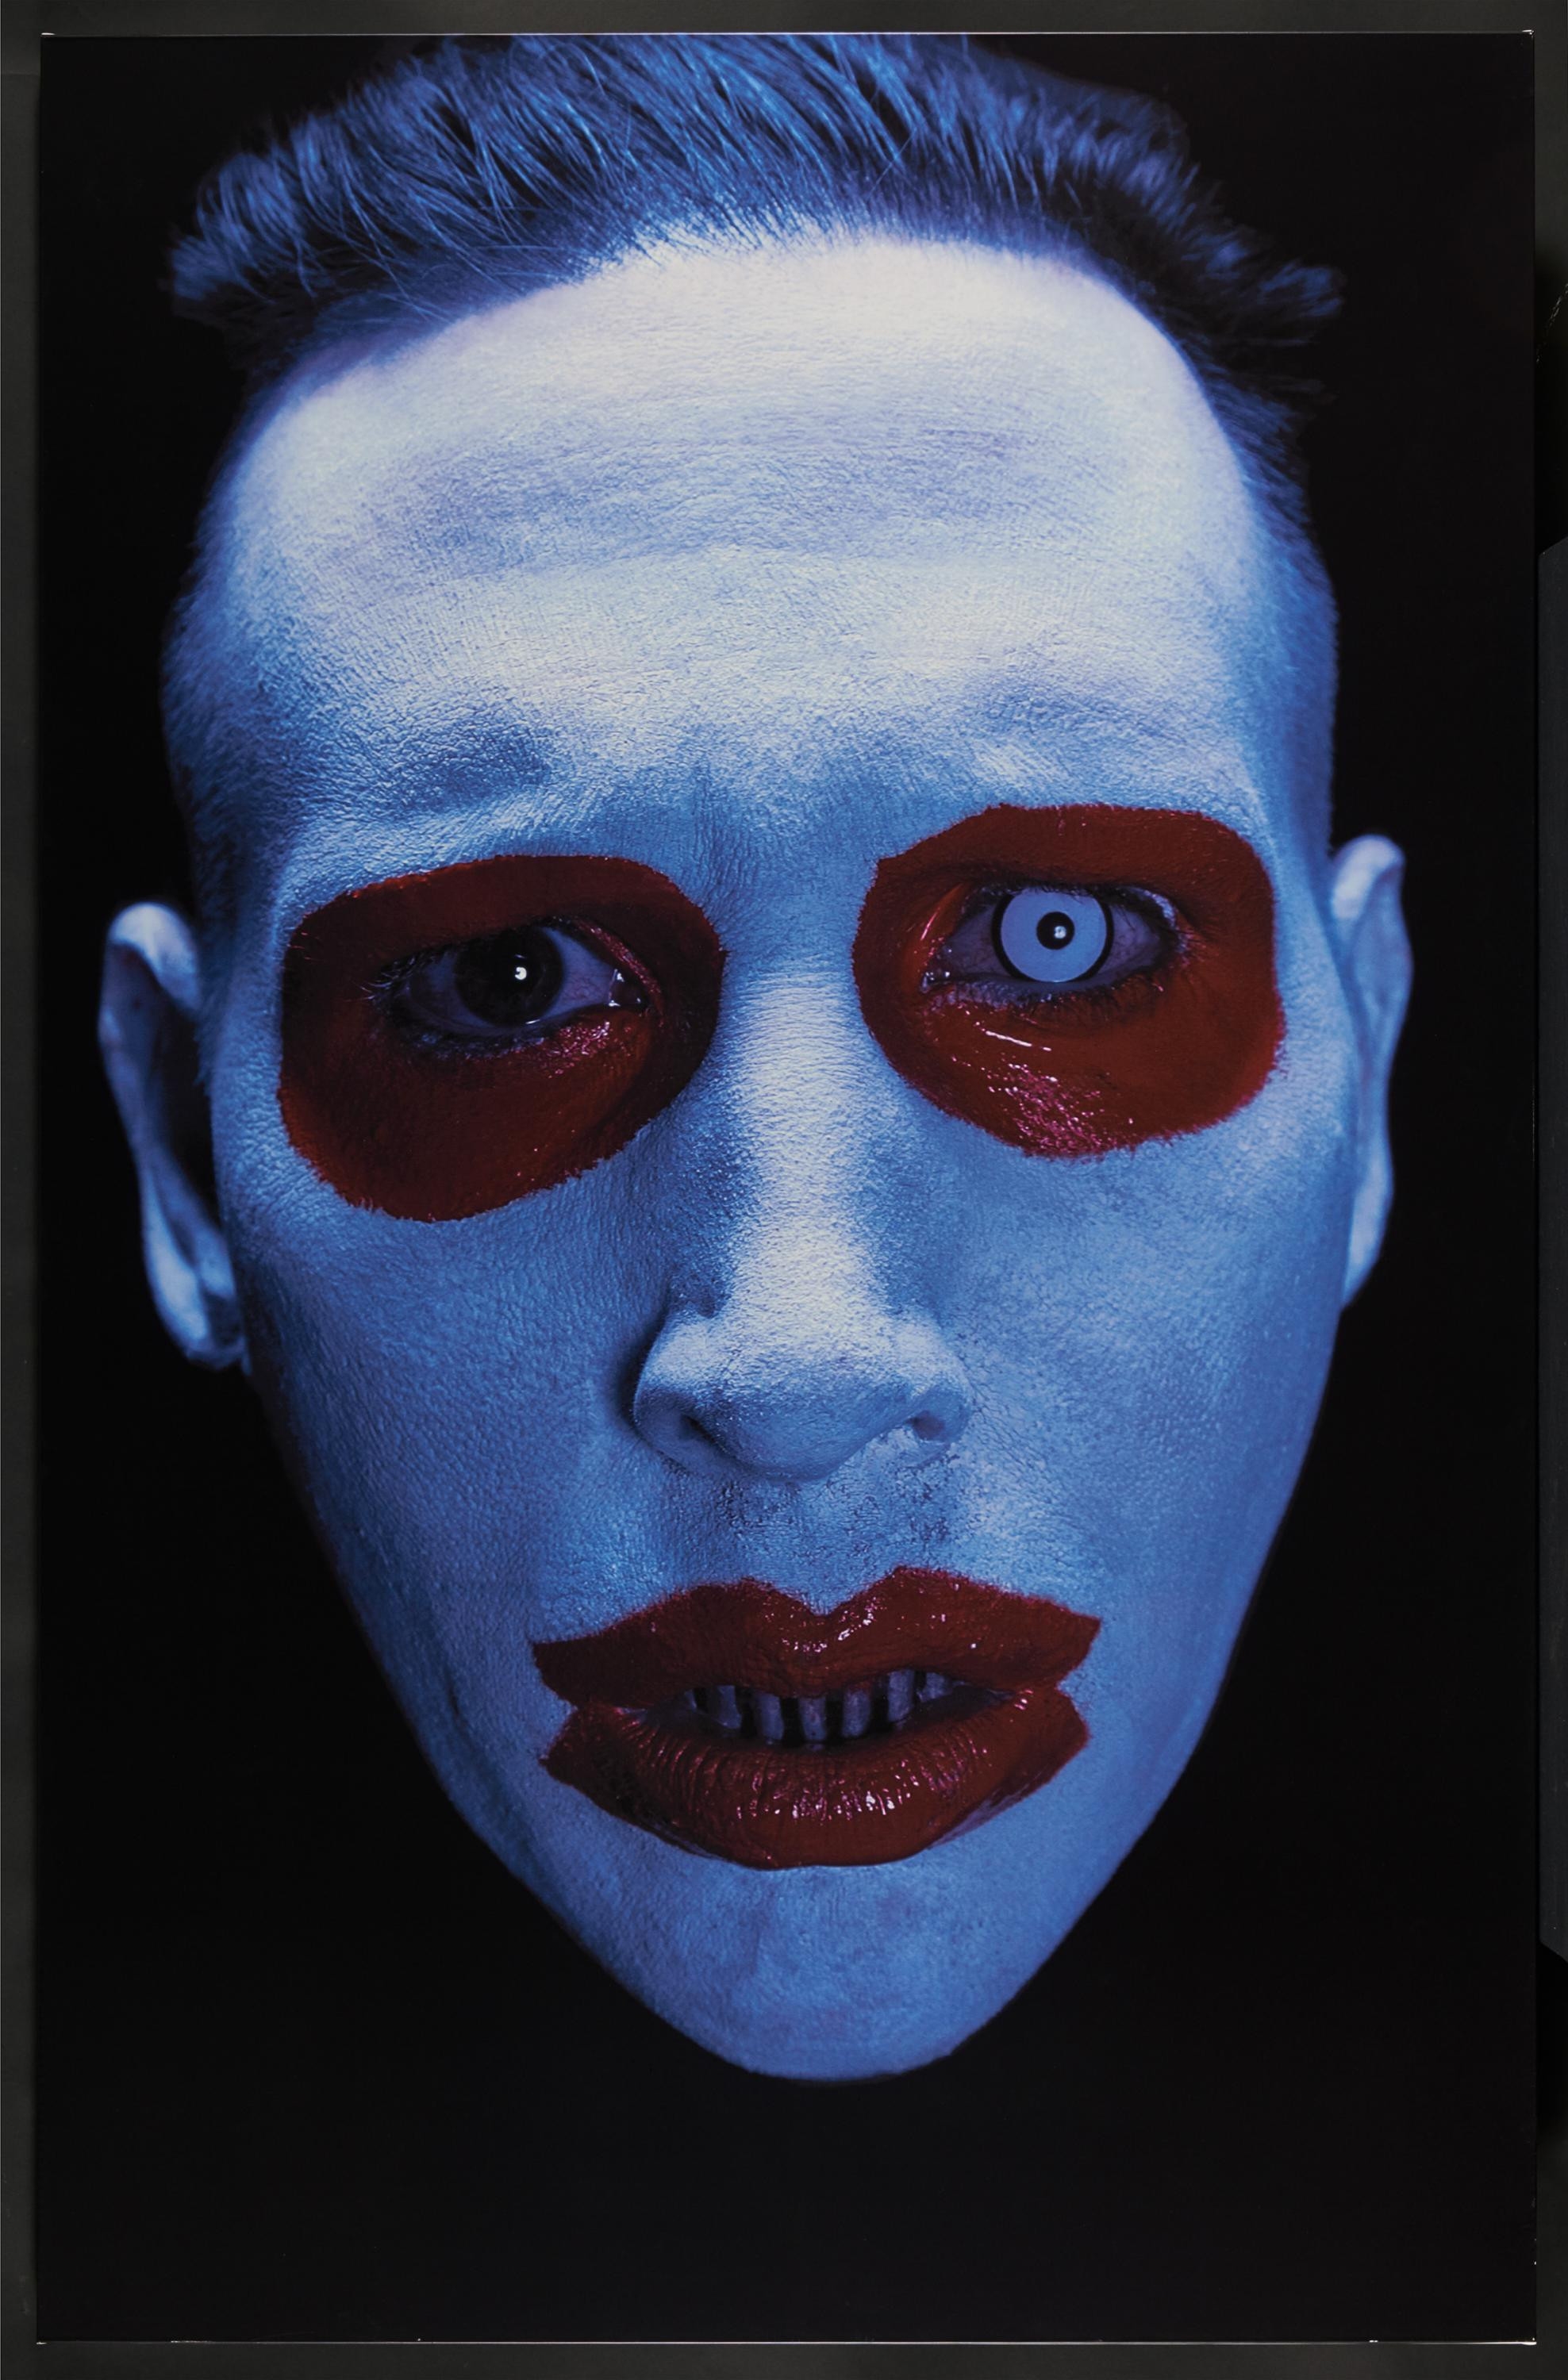 Artwork by Gottfried Helnwein, The Golden Age 37 (Marilyn Manson)., Made of Carbon print on vinyl